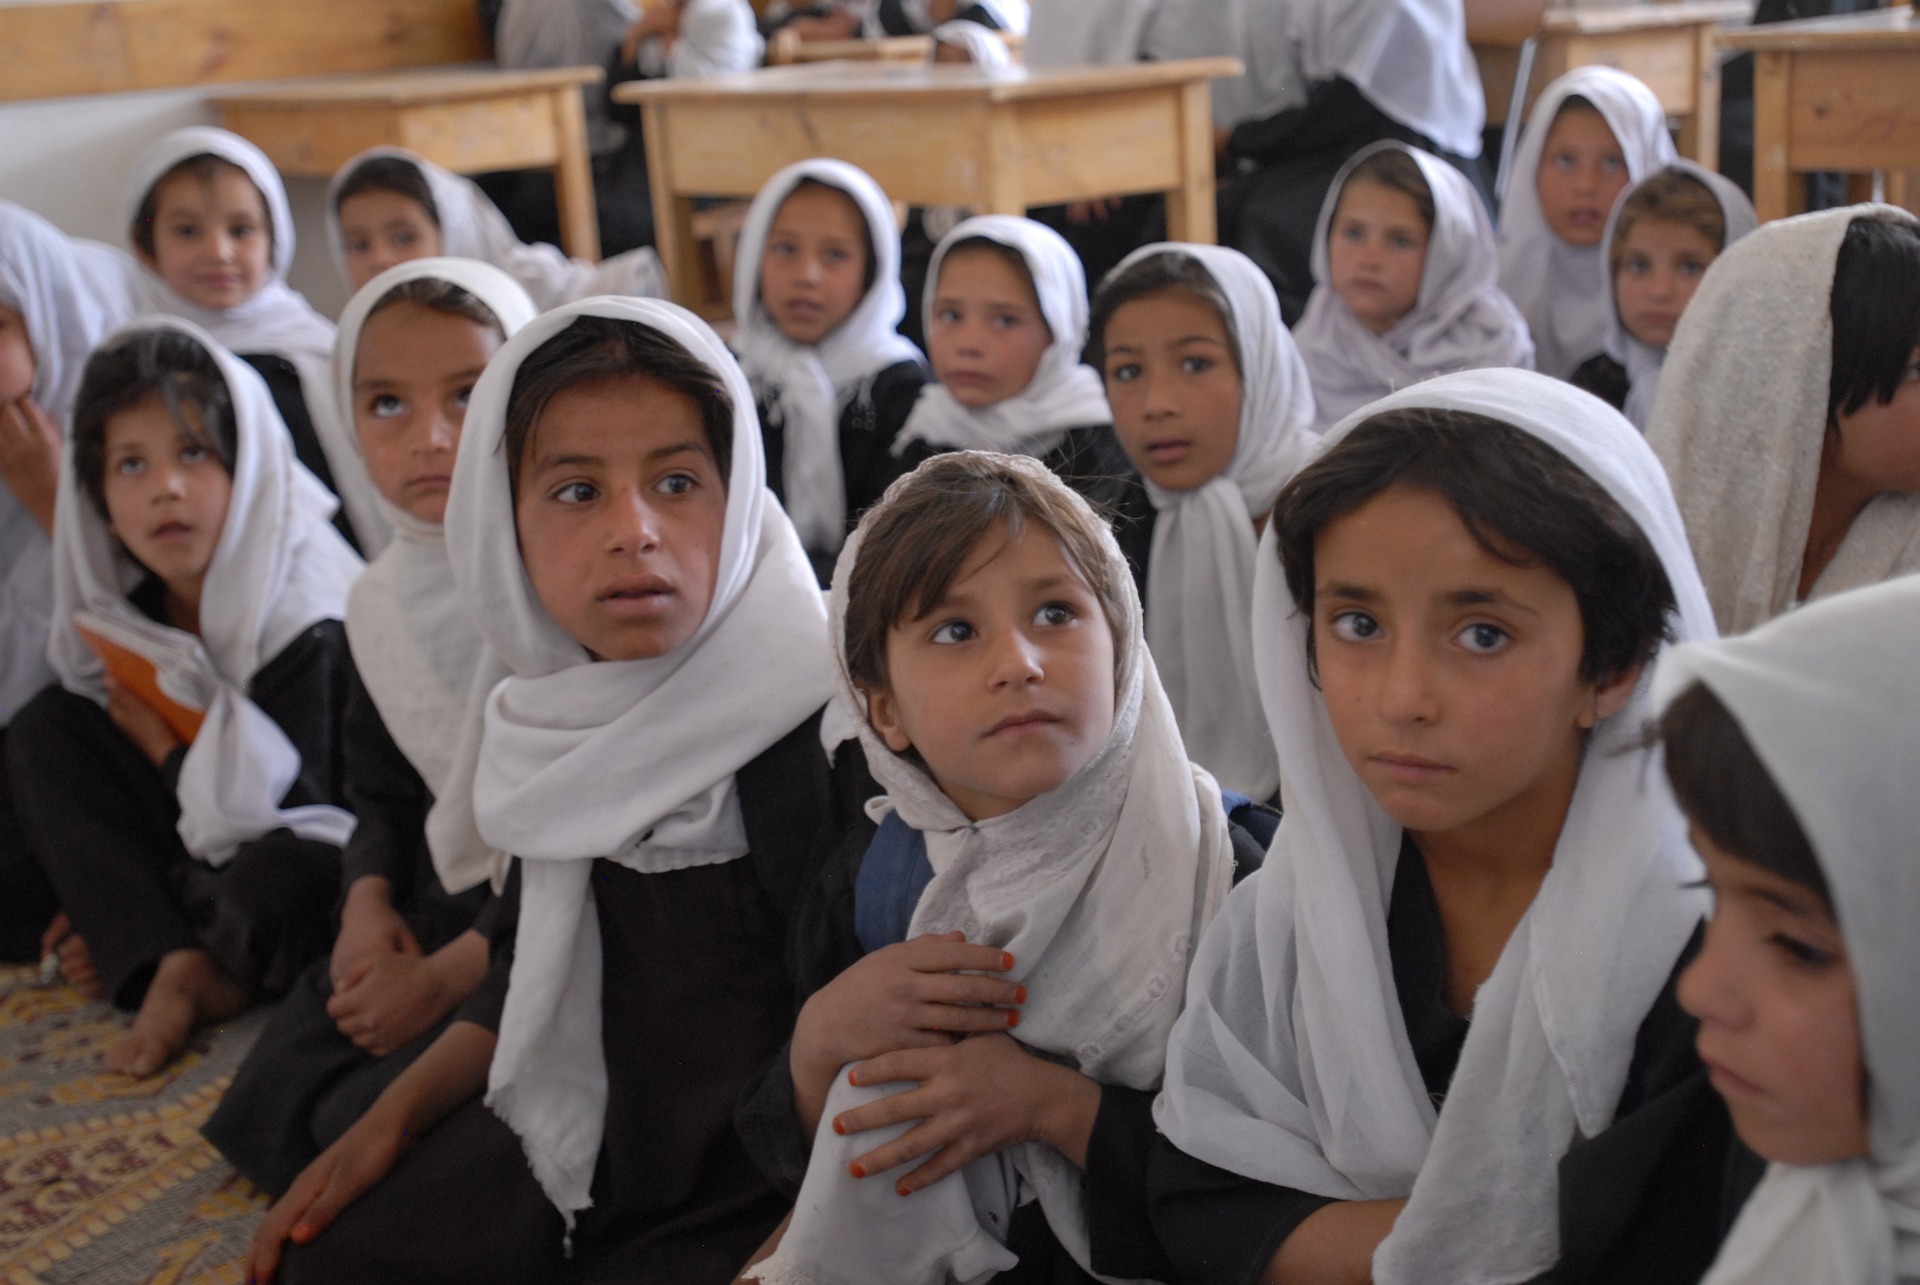 https://pixabay.com/photos/afghanistan-school-classroom-girls-80087/